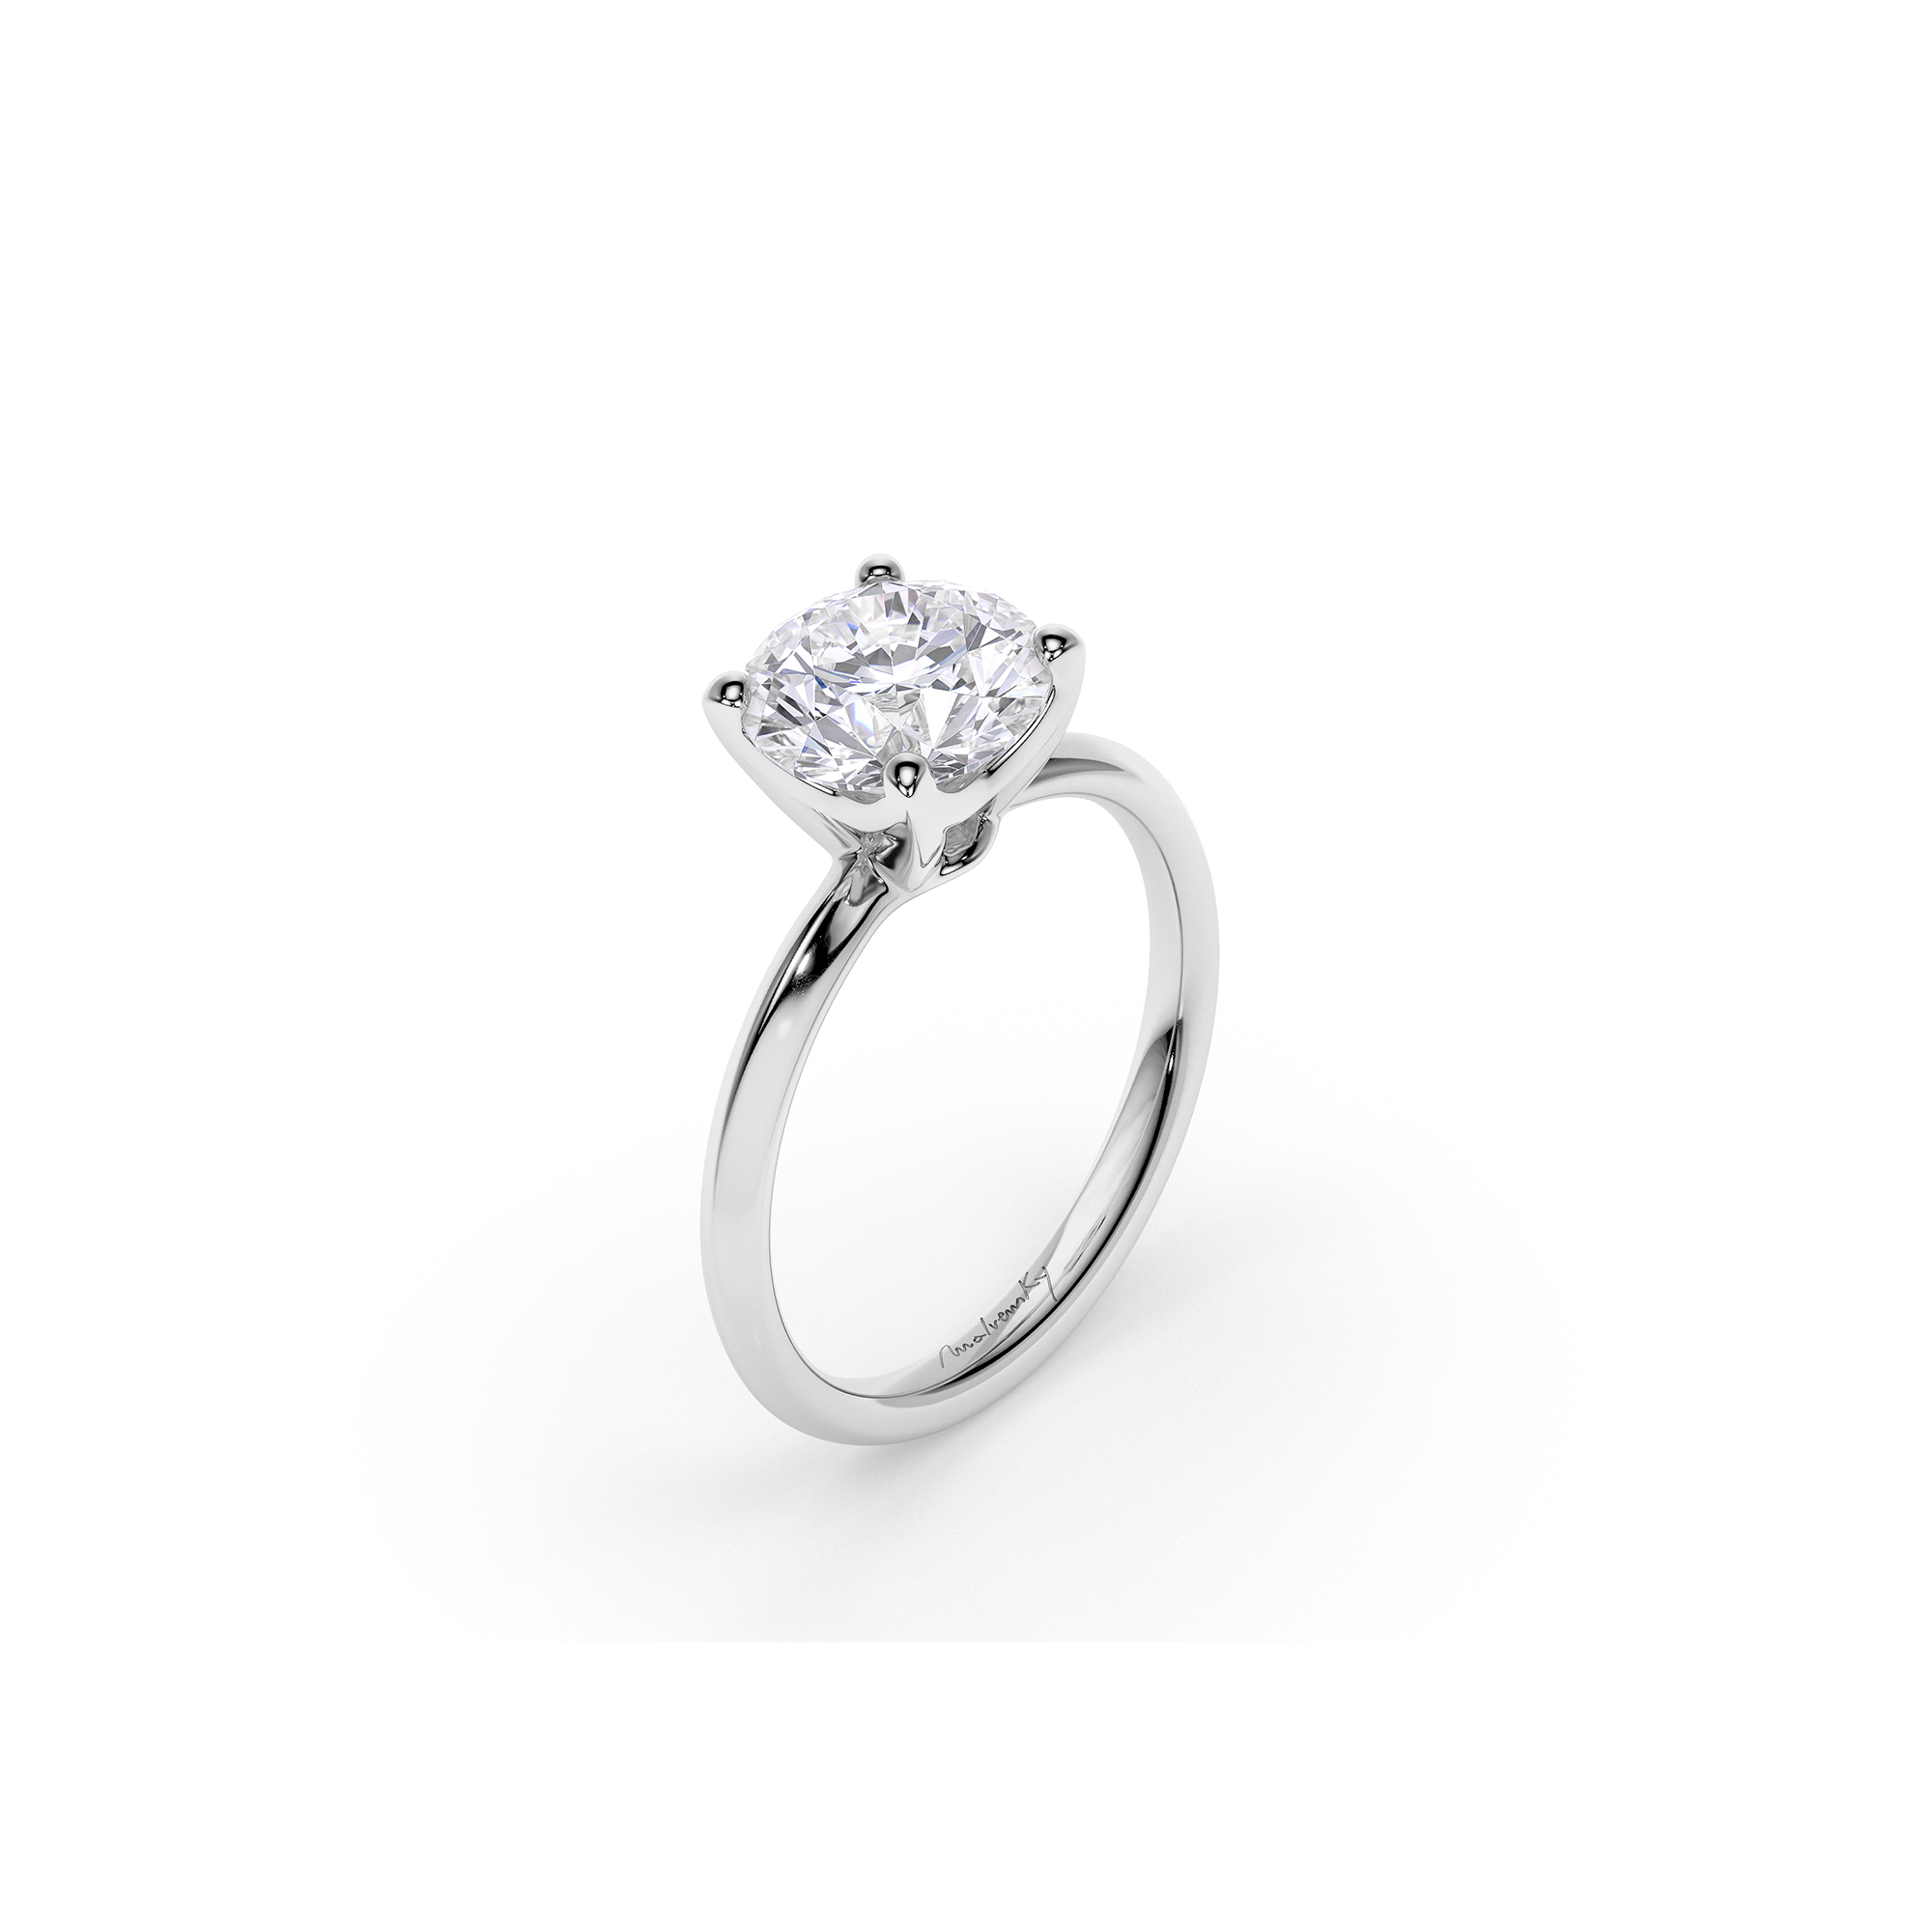 Platinum Iconic M Engagement Ring Round Cut 2.03 CT EVS2 Lab Grown Diamond